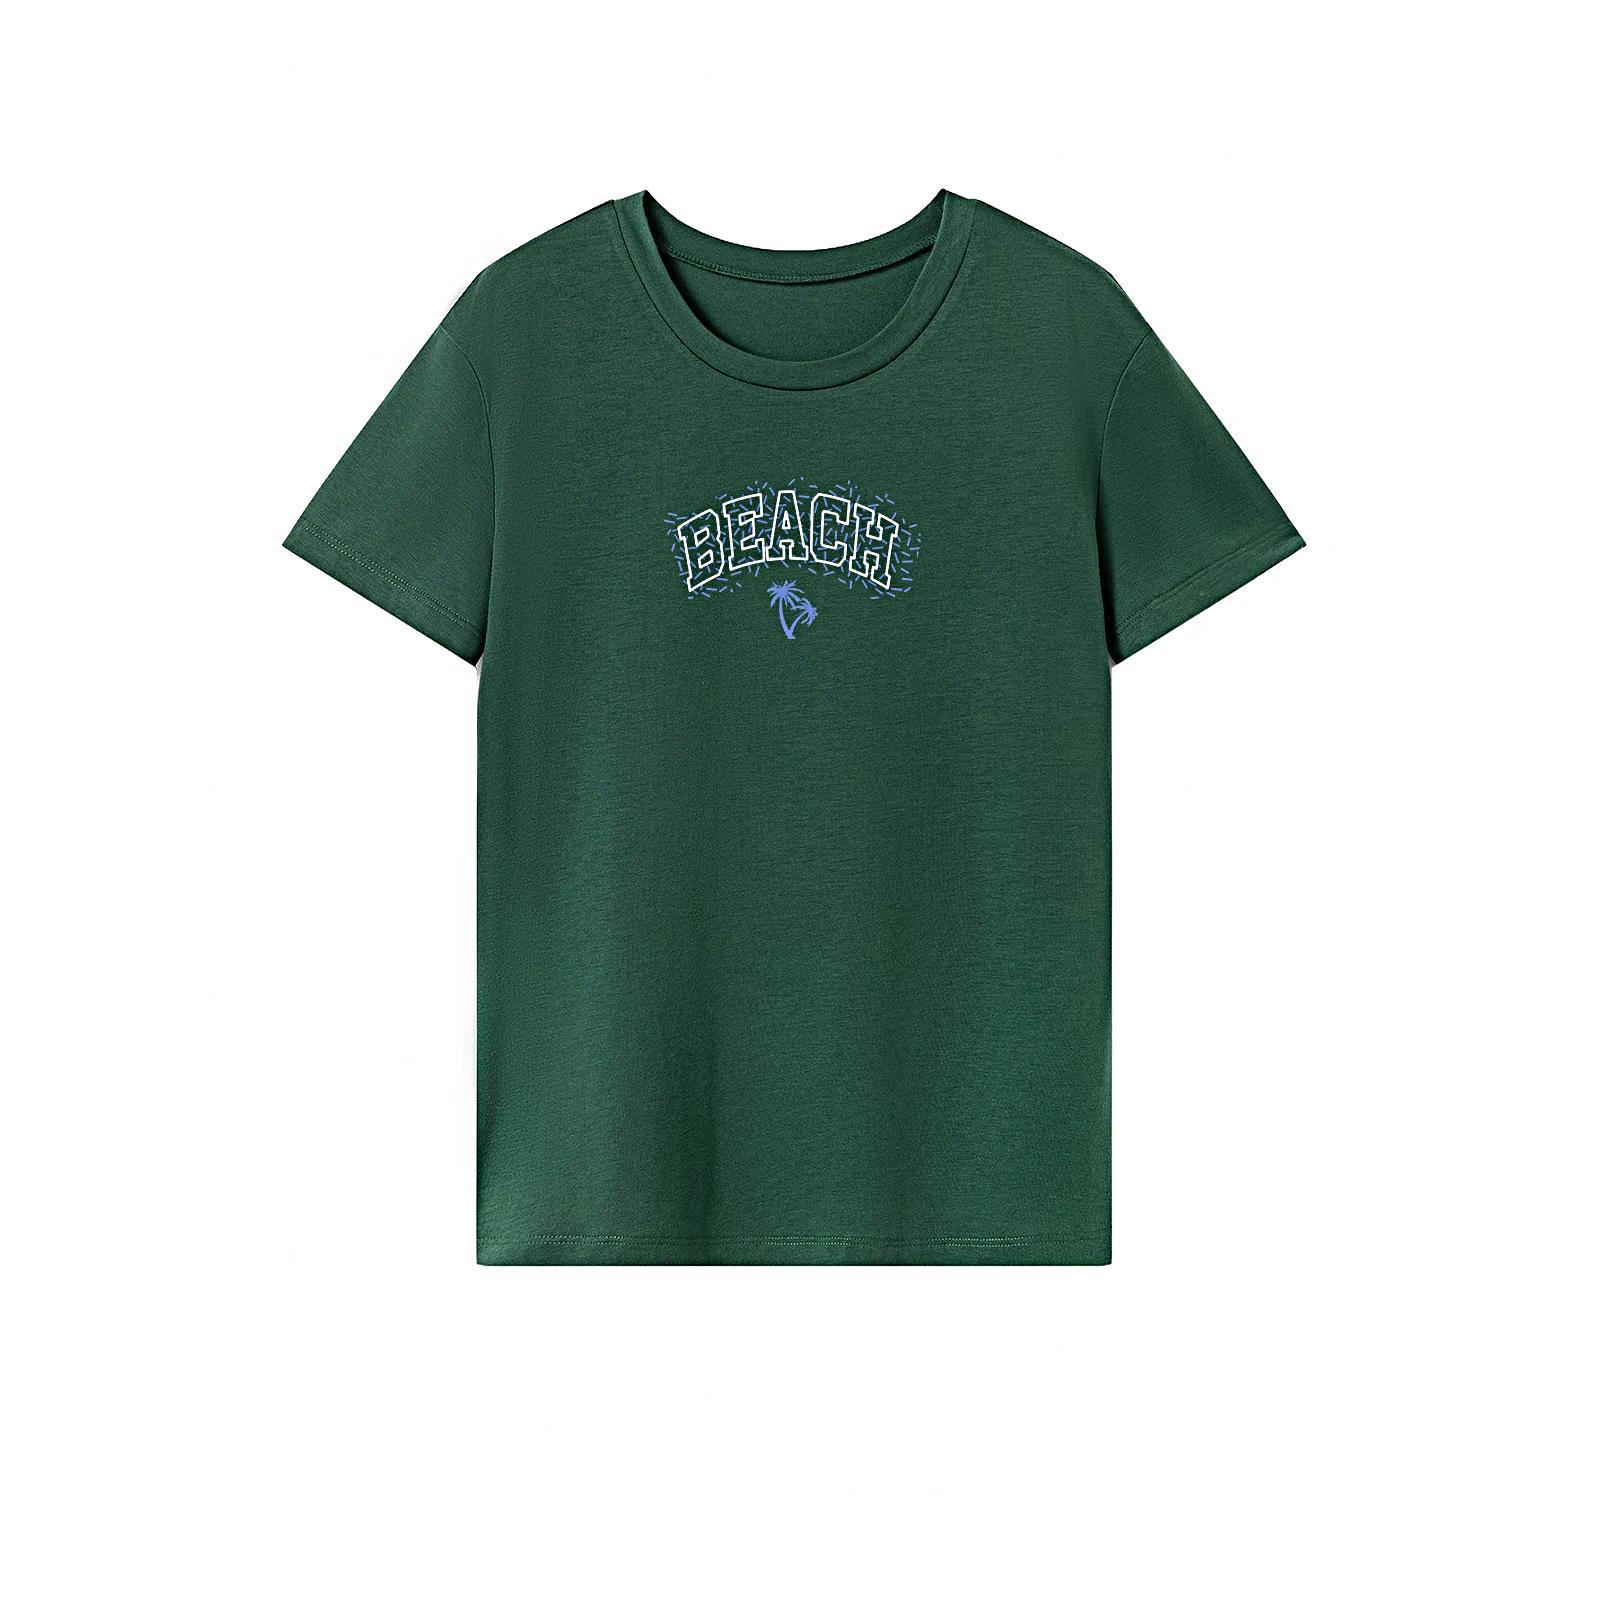 Women's T Shirt Summer Stylish Short Sleeve Top for Walking Traveling Sports XL